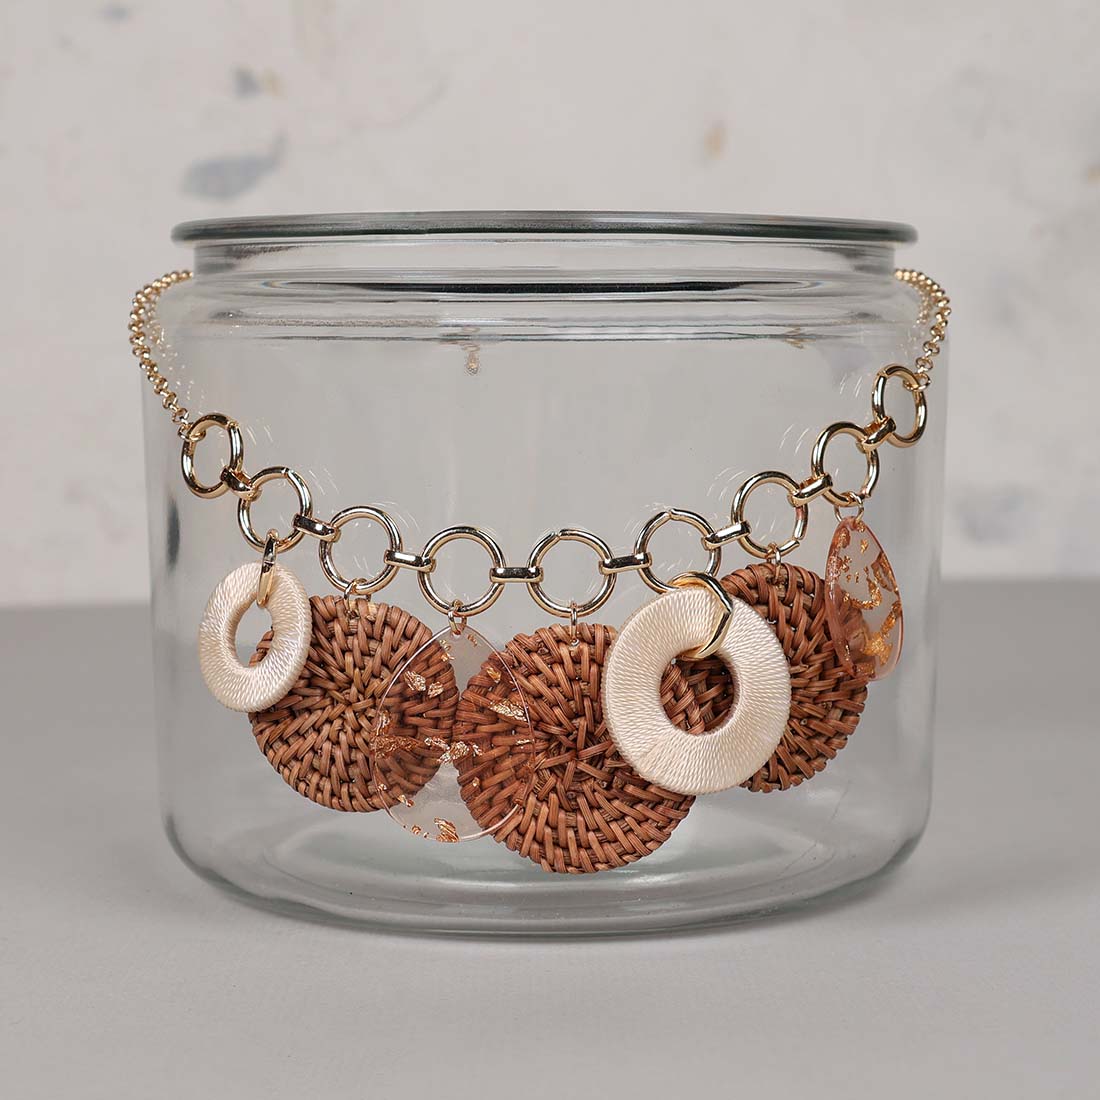 Jewelry | Clothing Accessories - Cracker Barrel